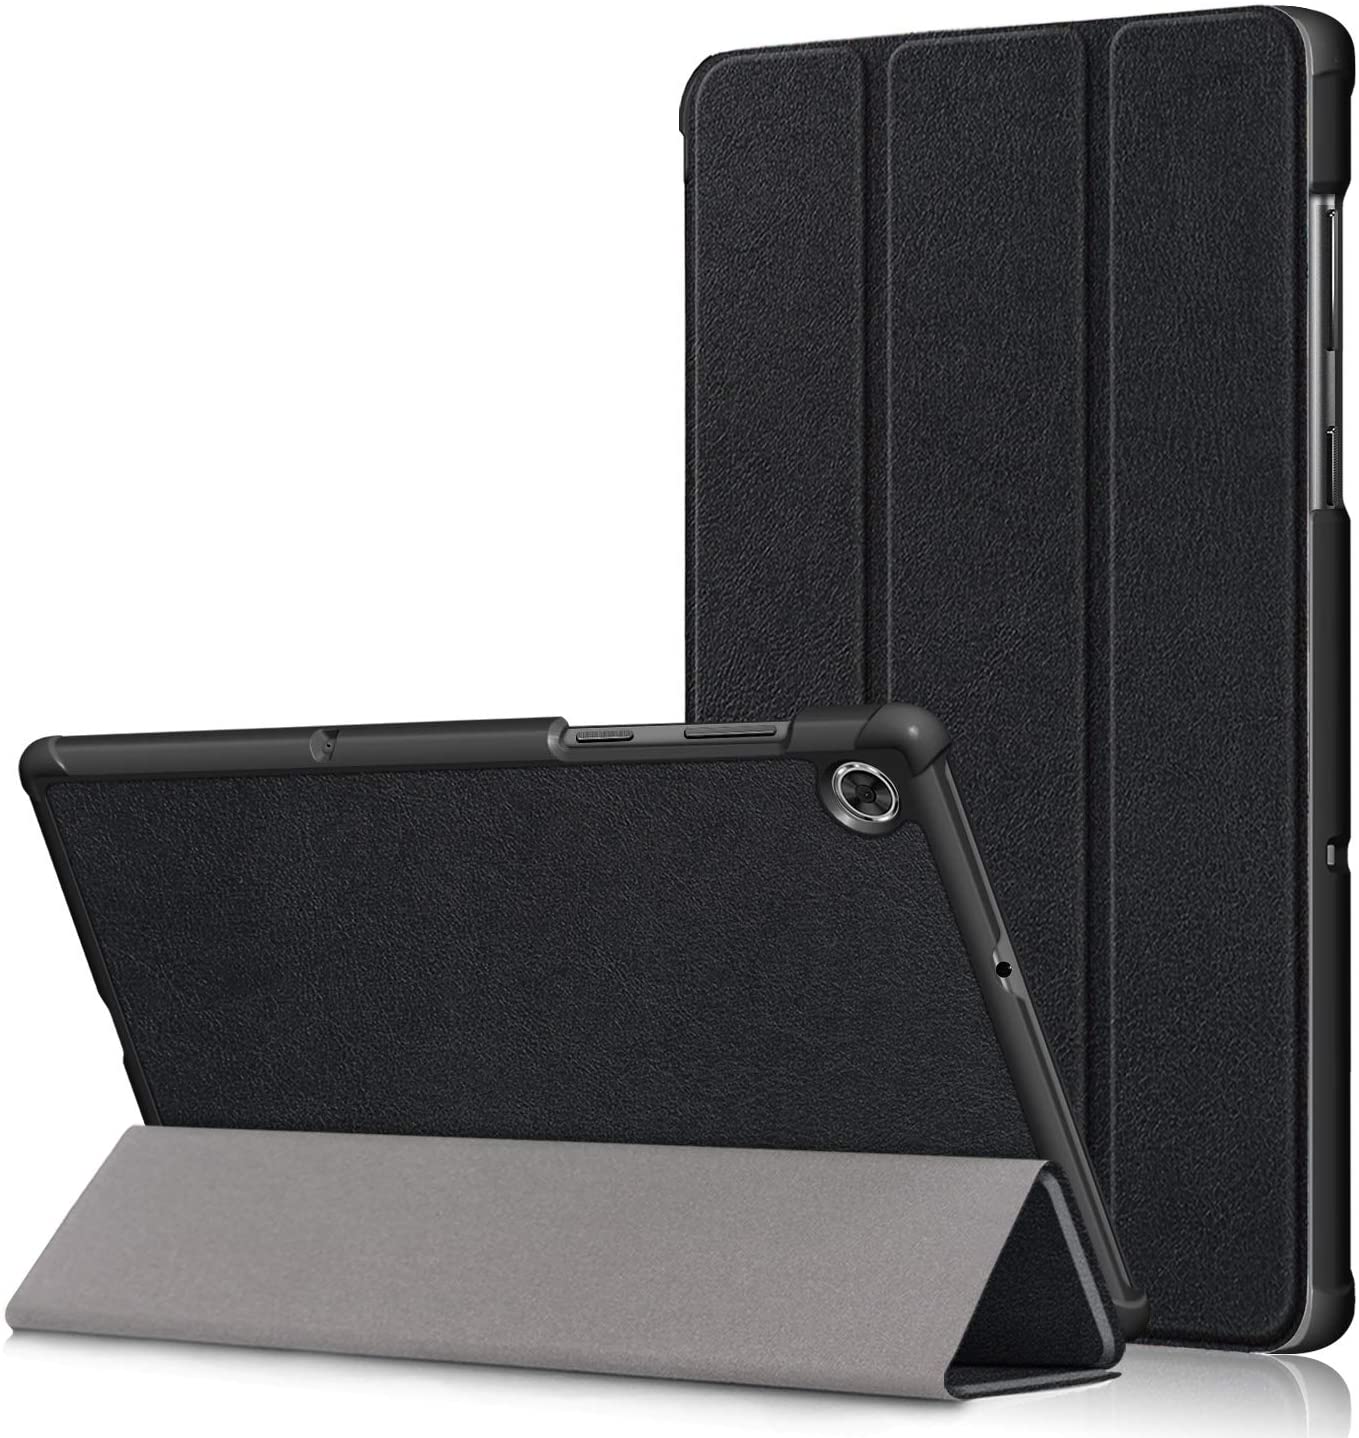 Funda Book Cover Para Lenovo M10 Plus (Tb-x606f) Negro